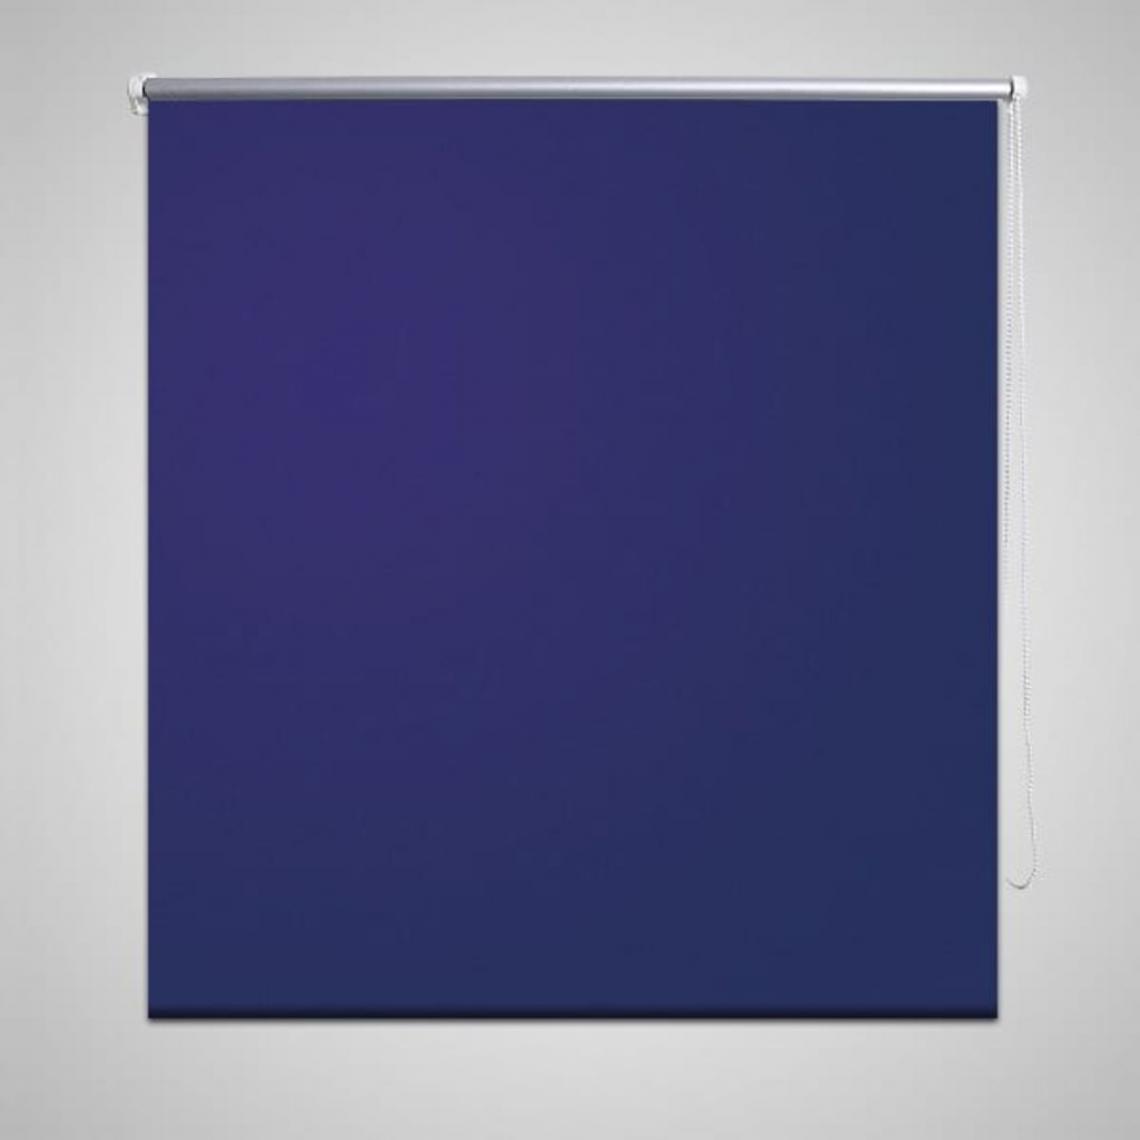 Chunhelife - Store enrouleur occultant 80 x 230 cm bleu - Store banne